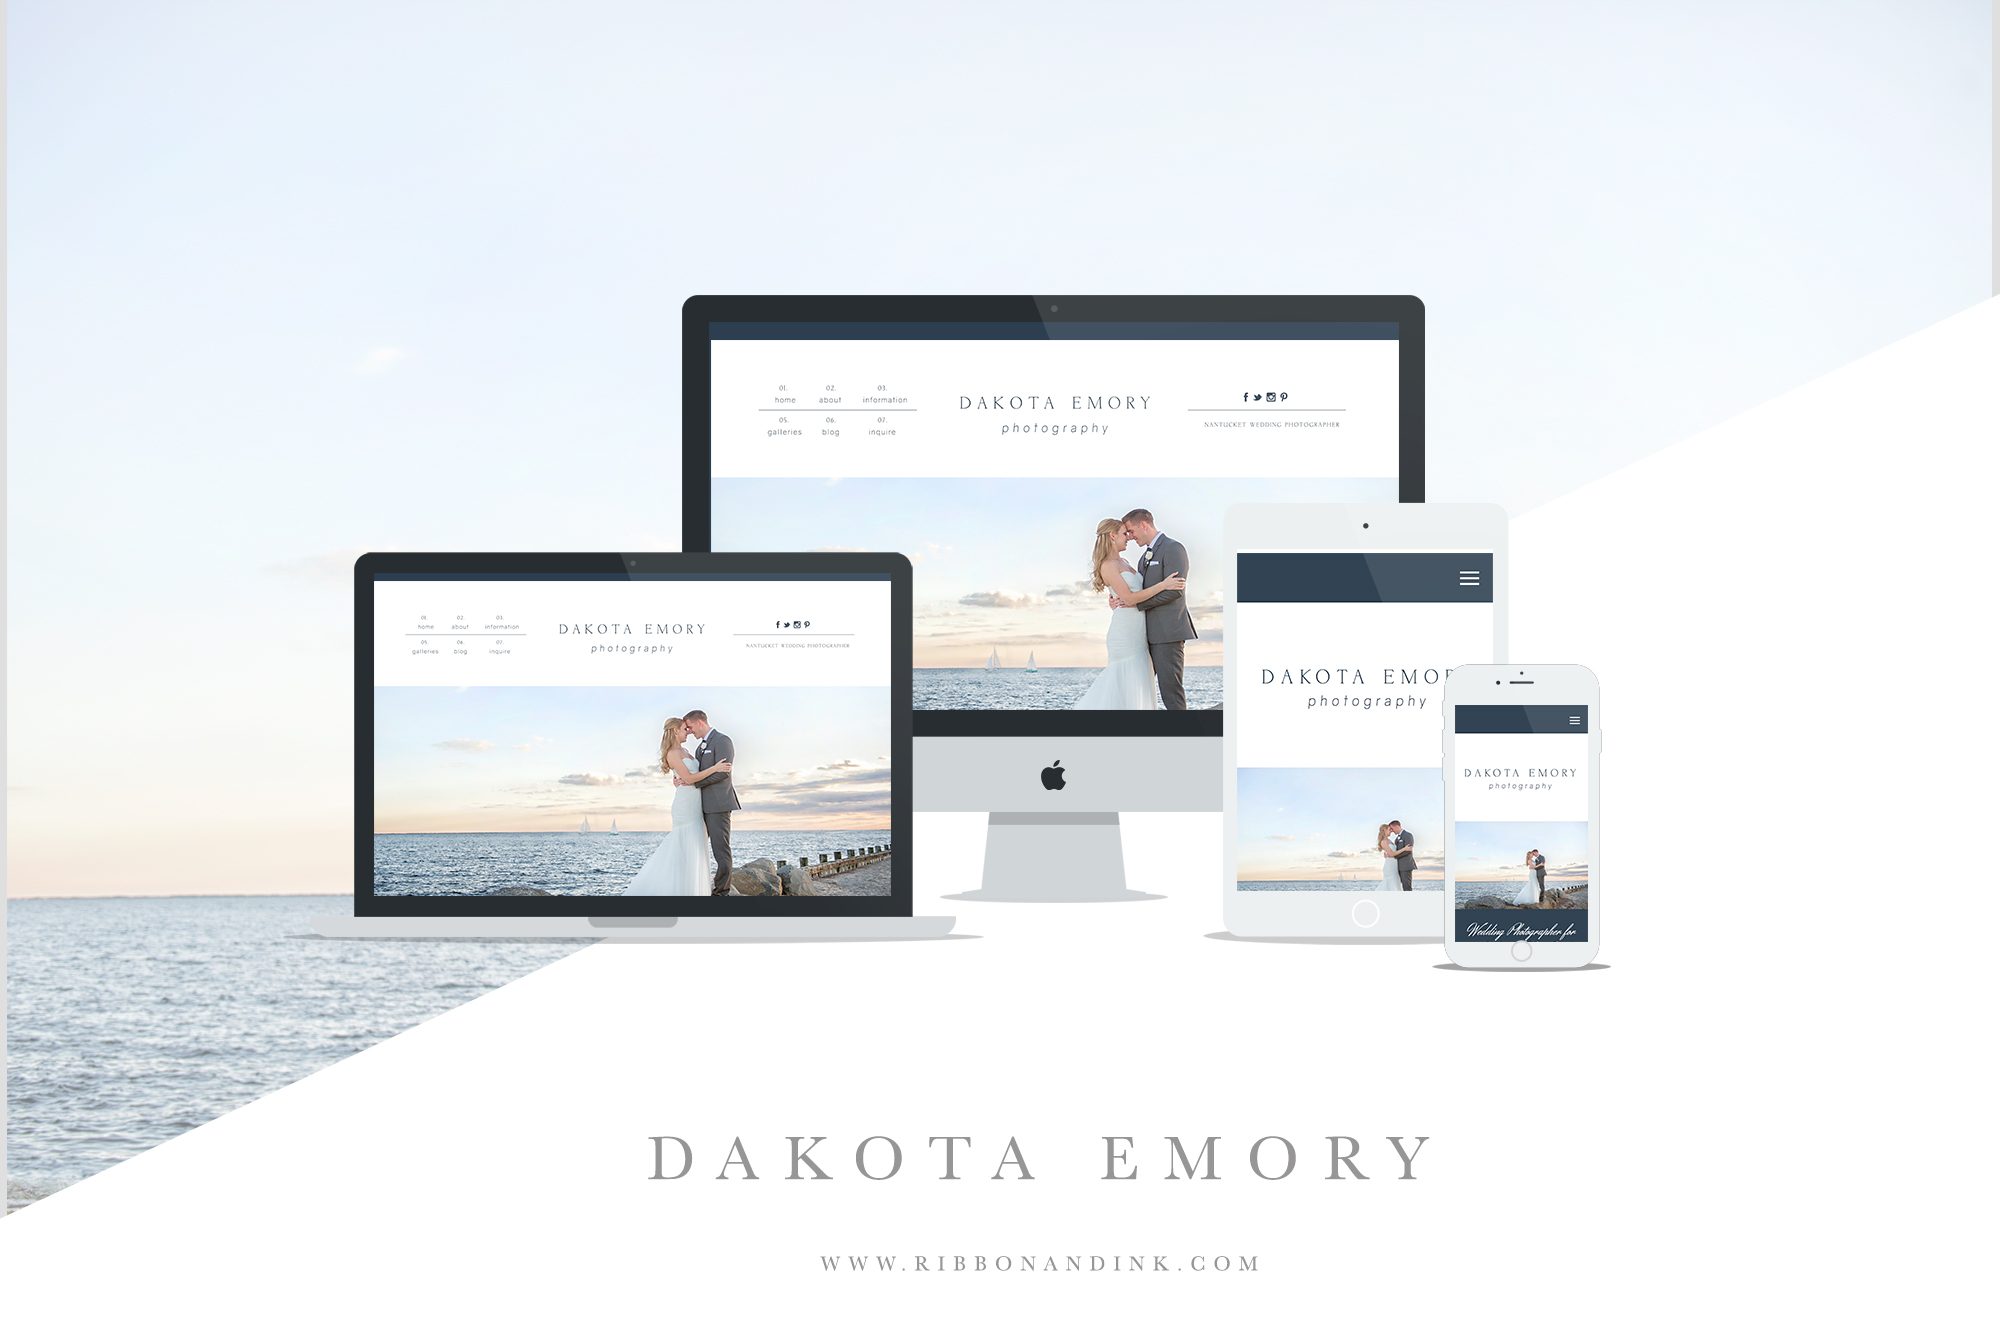 showit5-design-website-template-for-photographers-navy-nautical-dakota